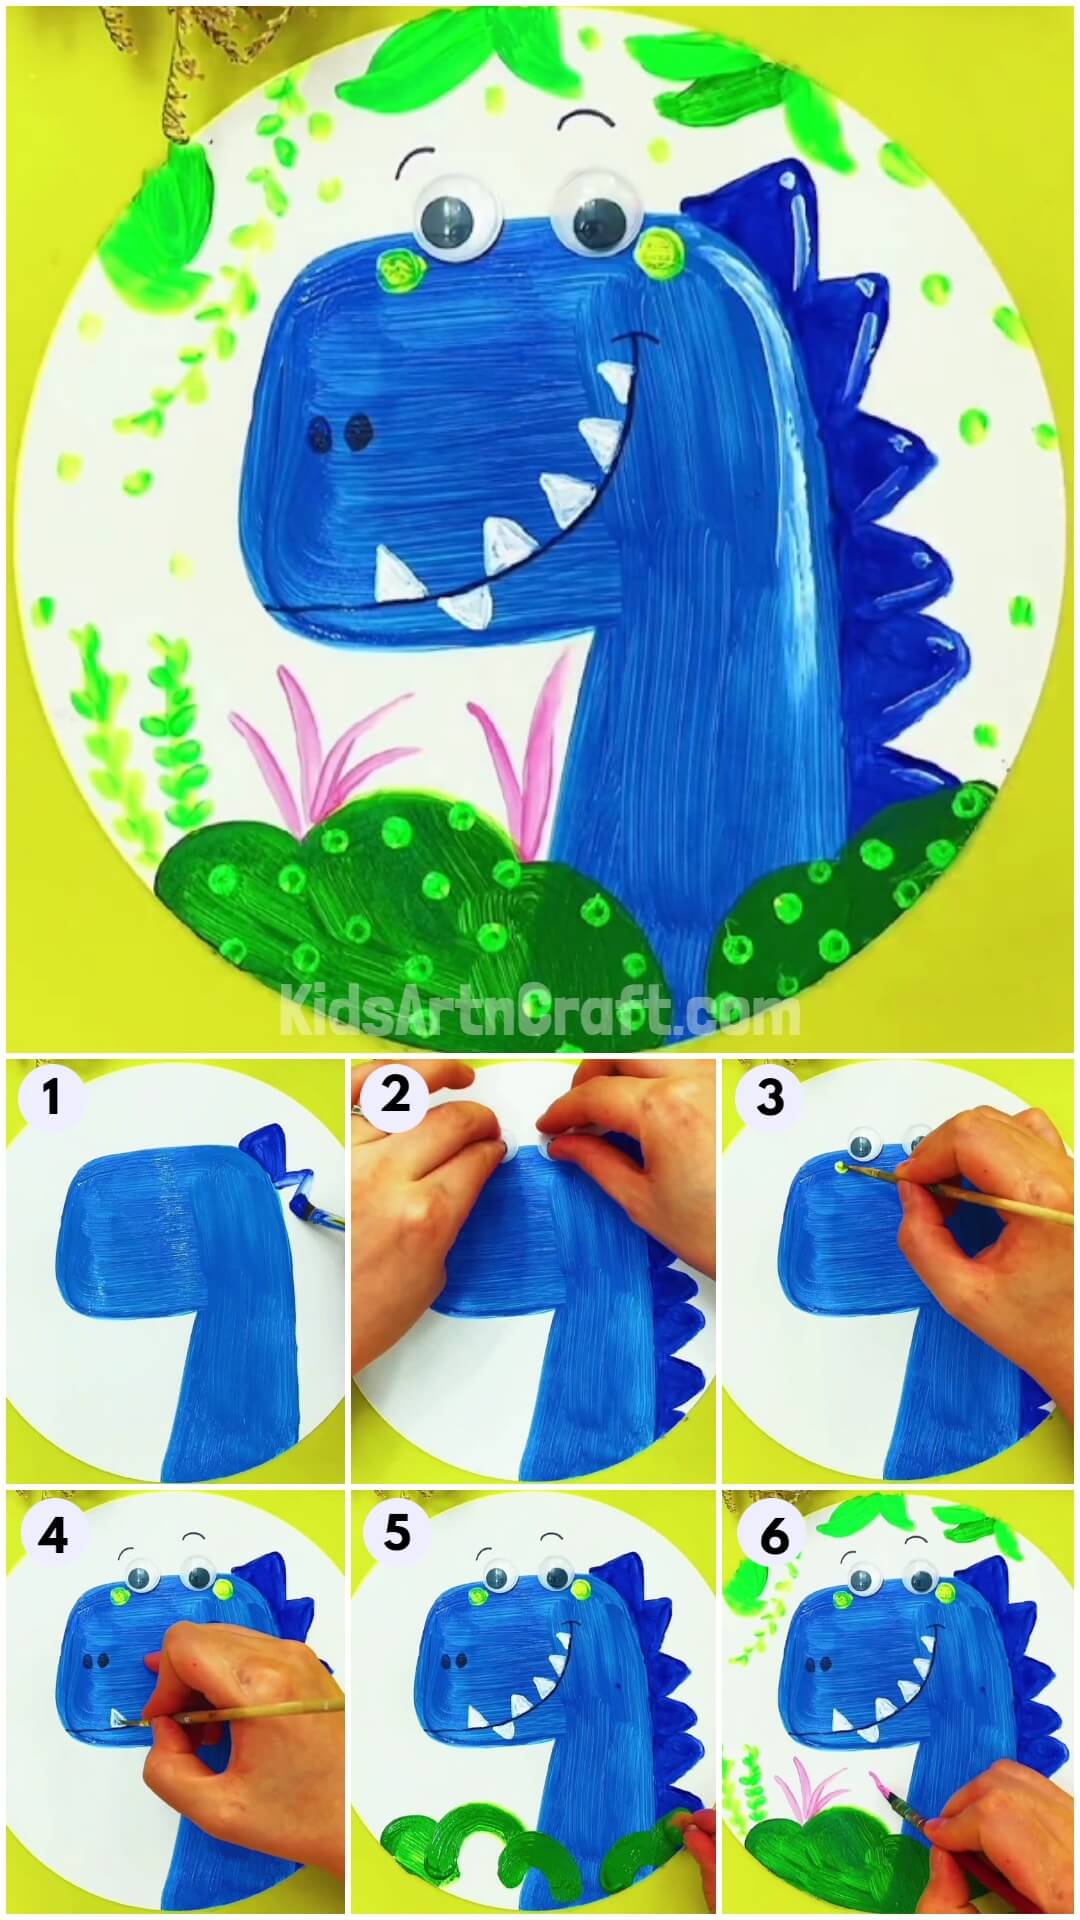 Adorable Dinosaur Face Artwork Step by Step Instructions For Kids-Cute Dinosaur Facial Design Tutorial for Children